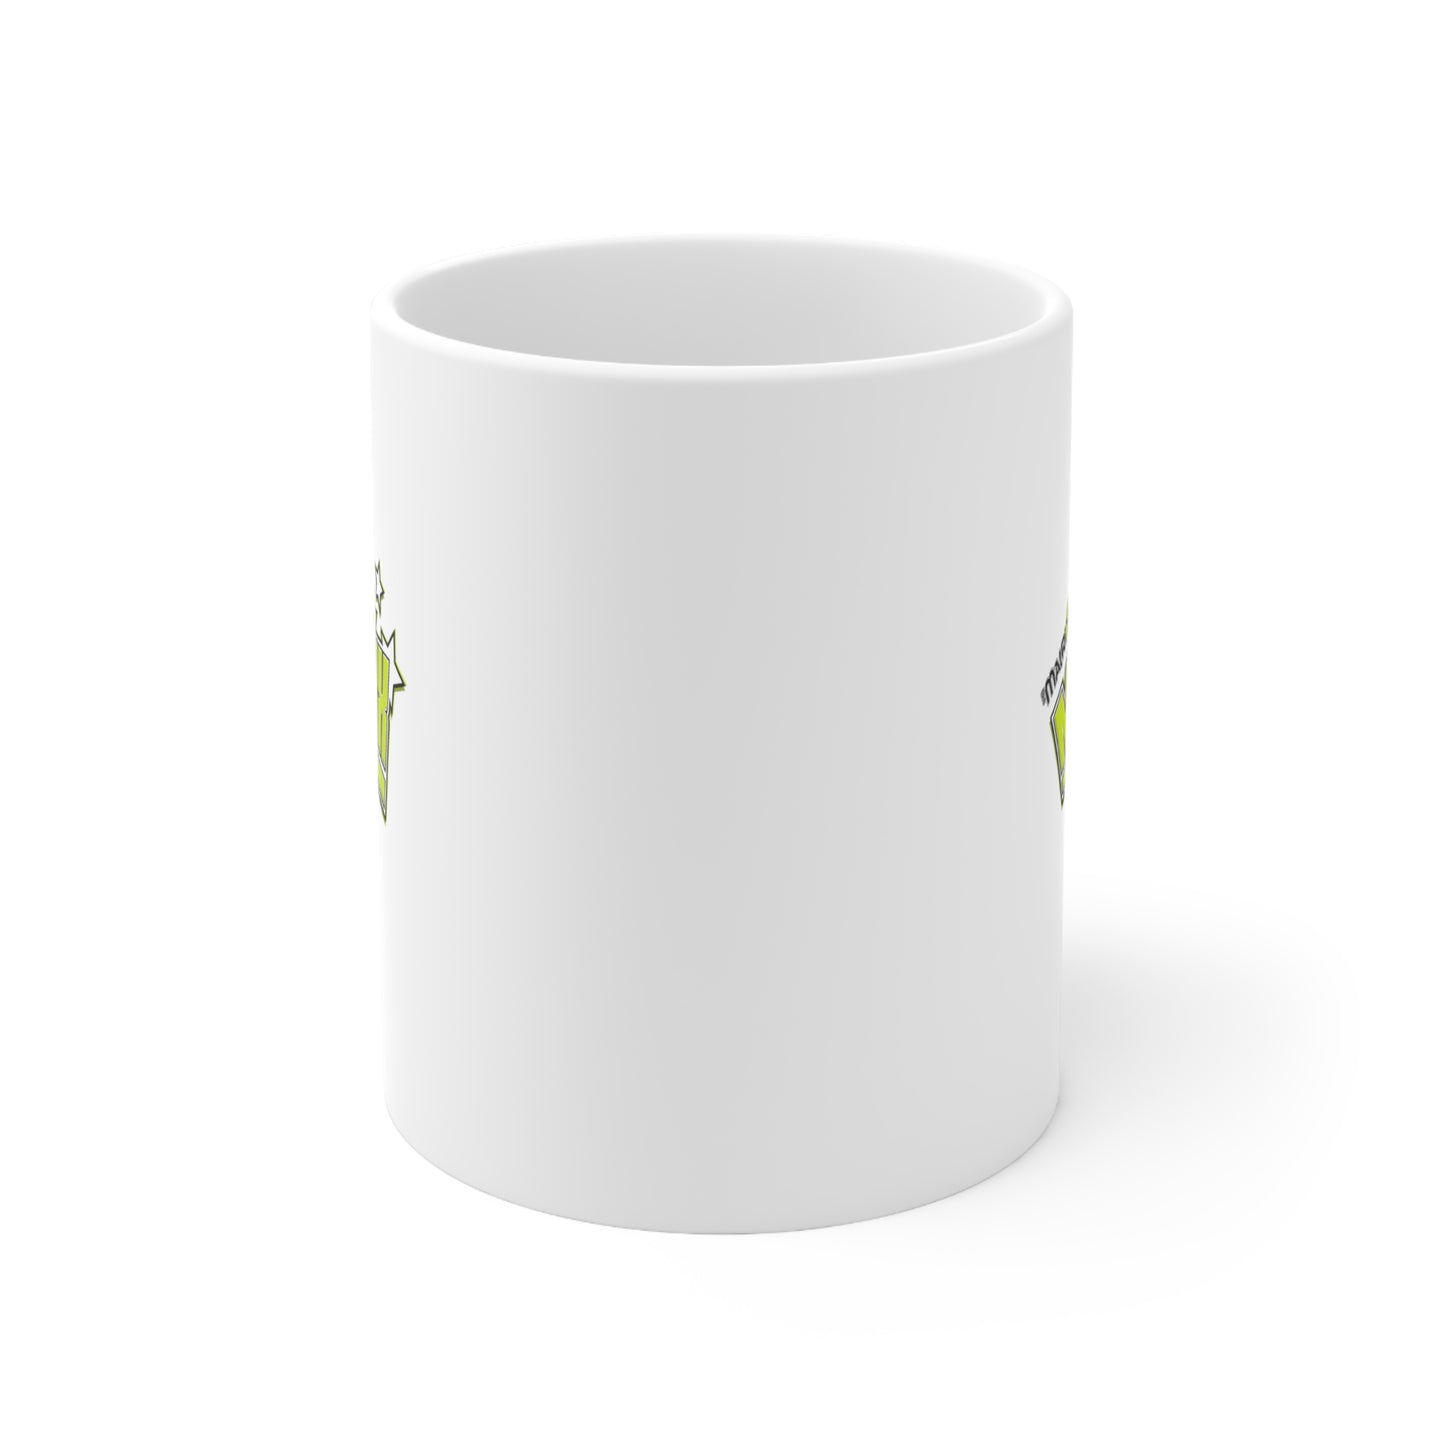 the Matrixx Magixx Ceramic Mug